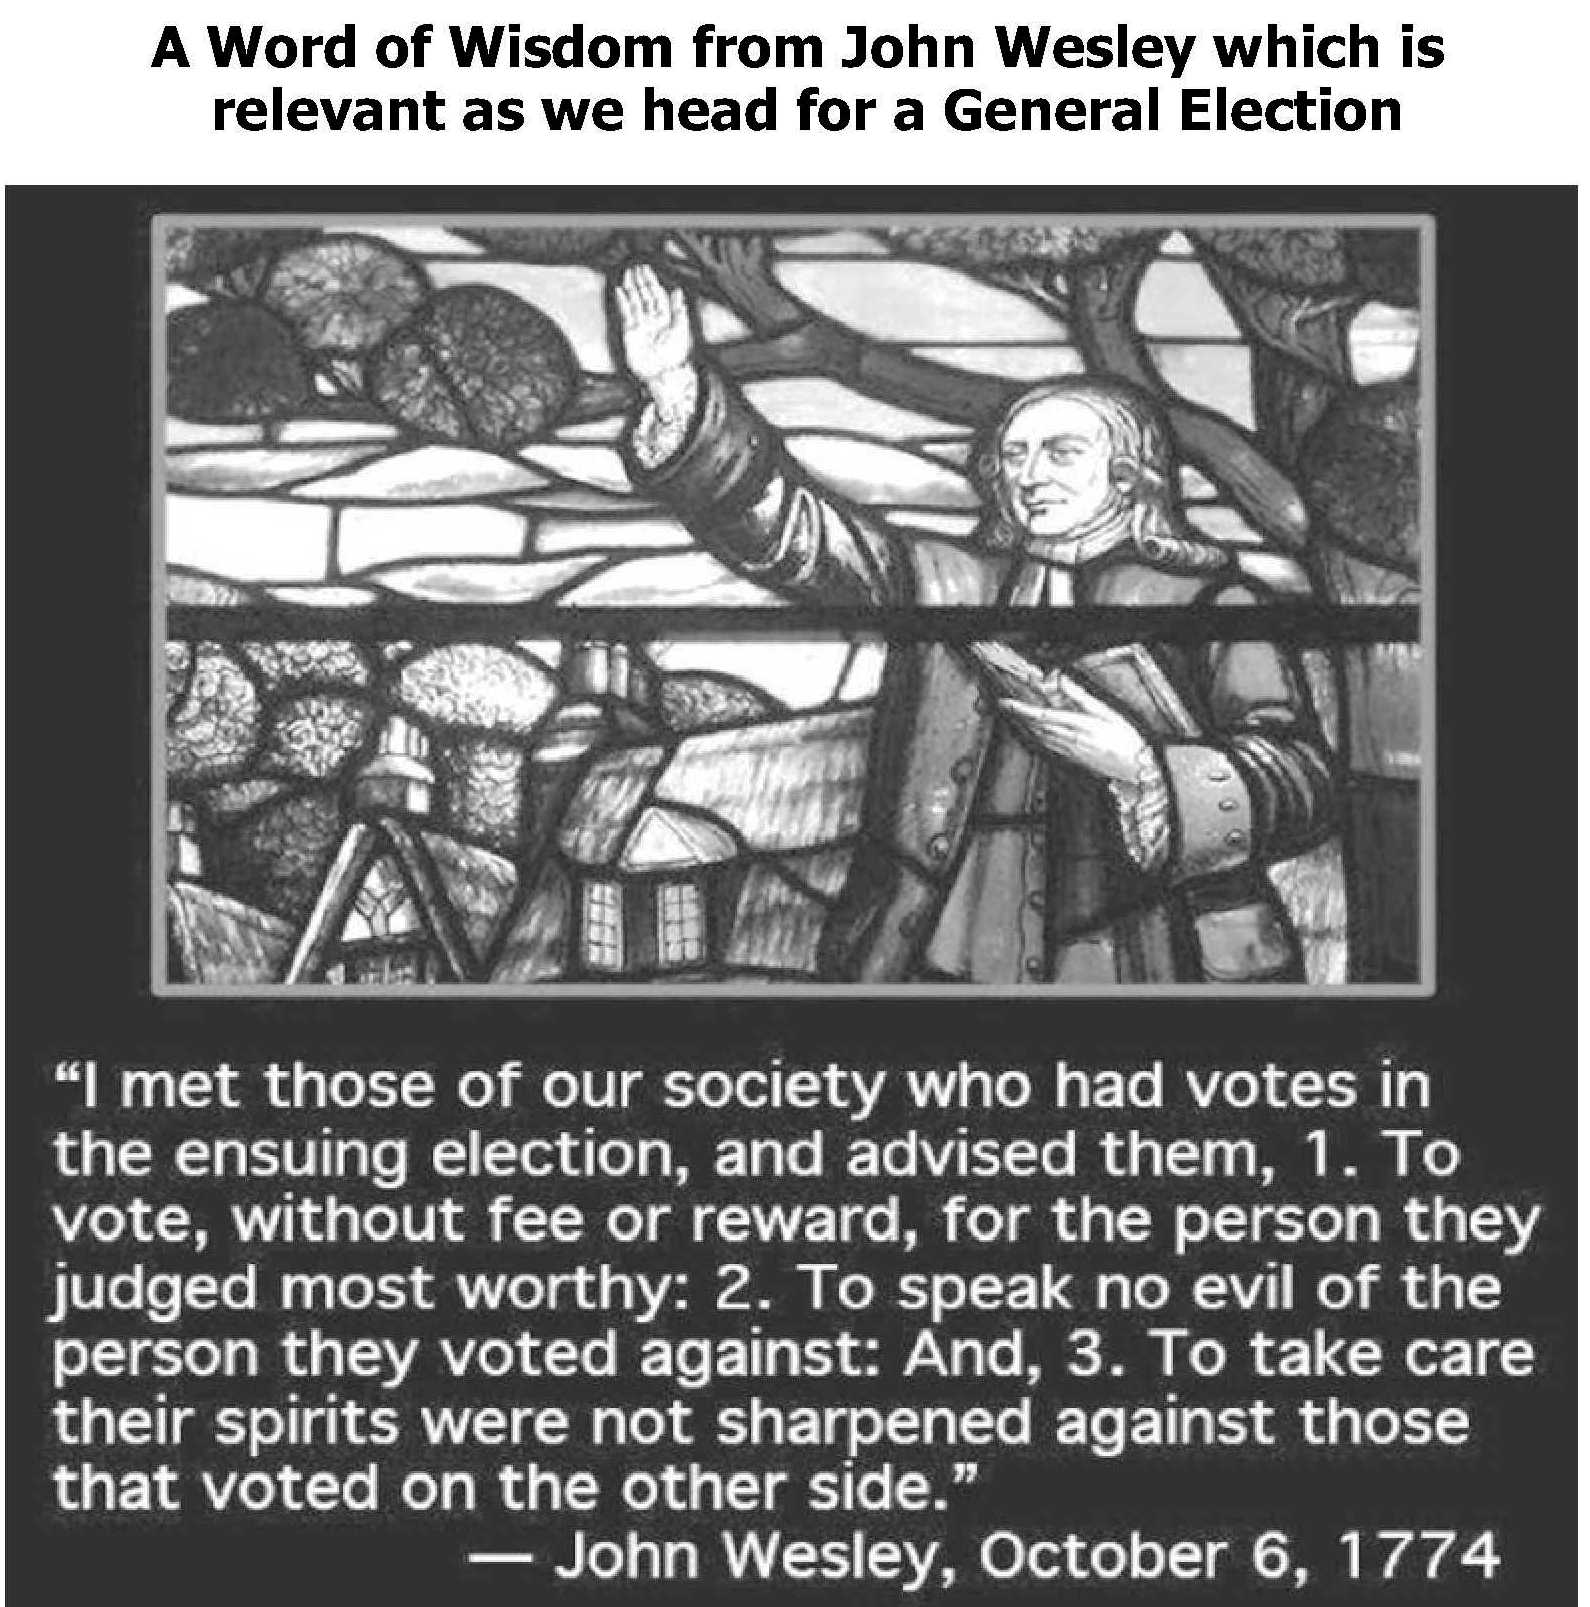 JOHN WESLEY RE ELECTION